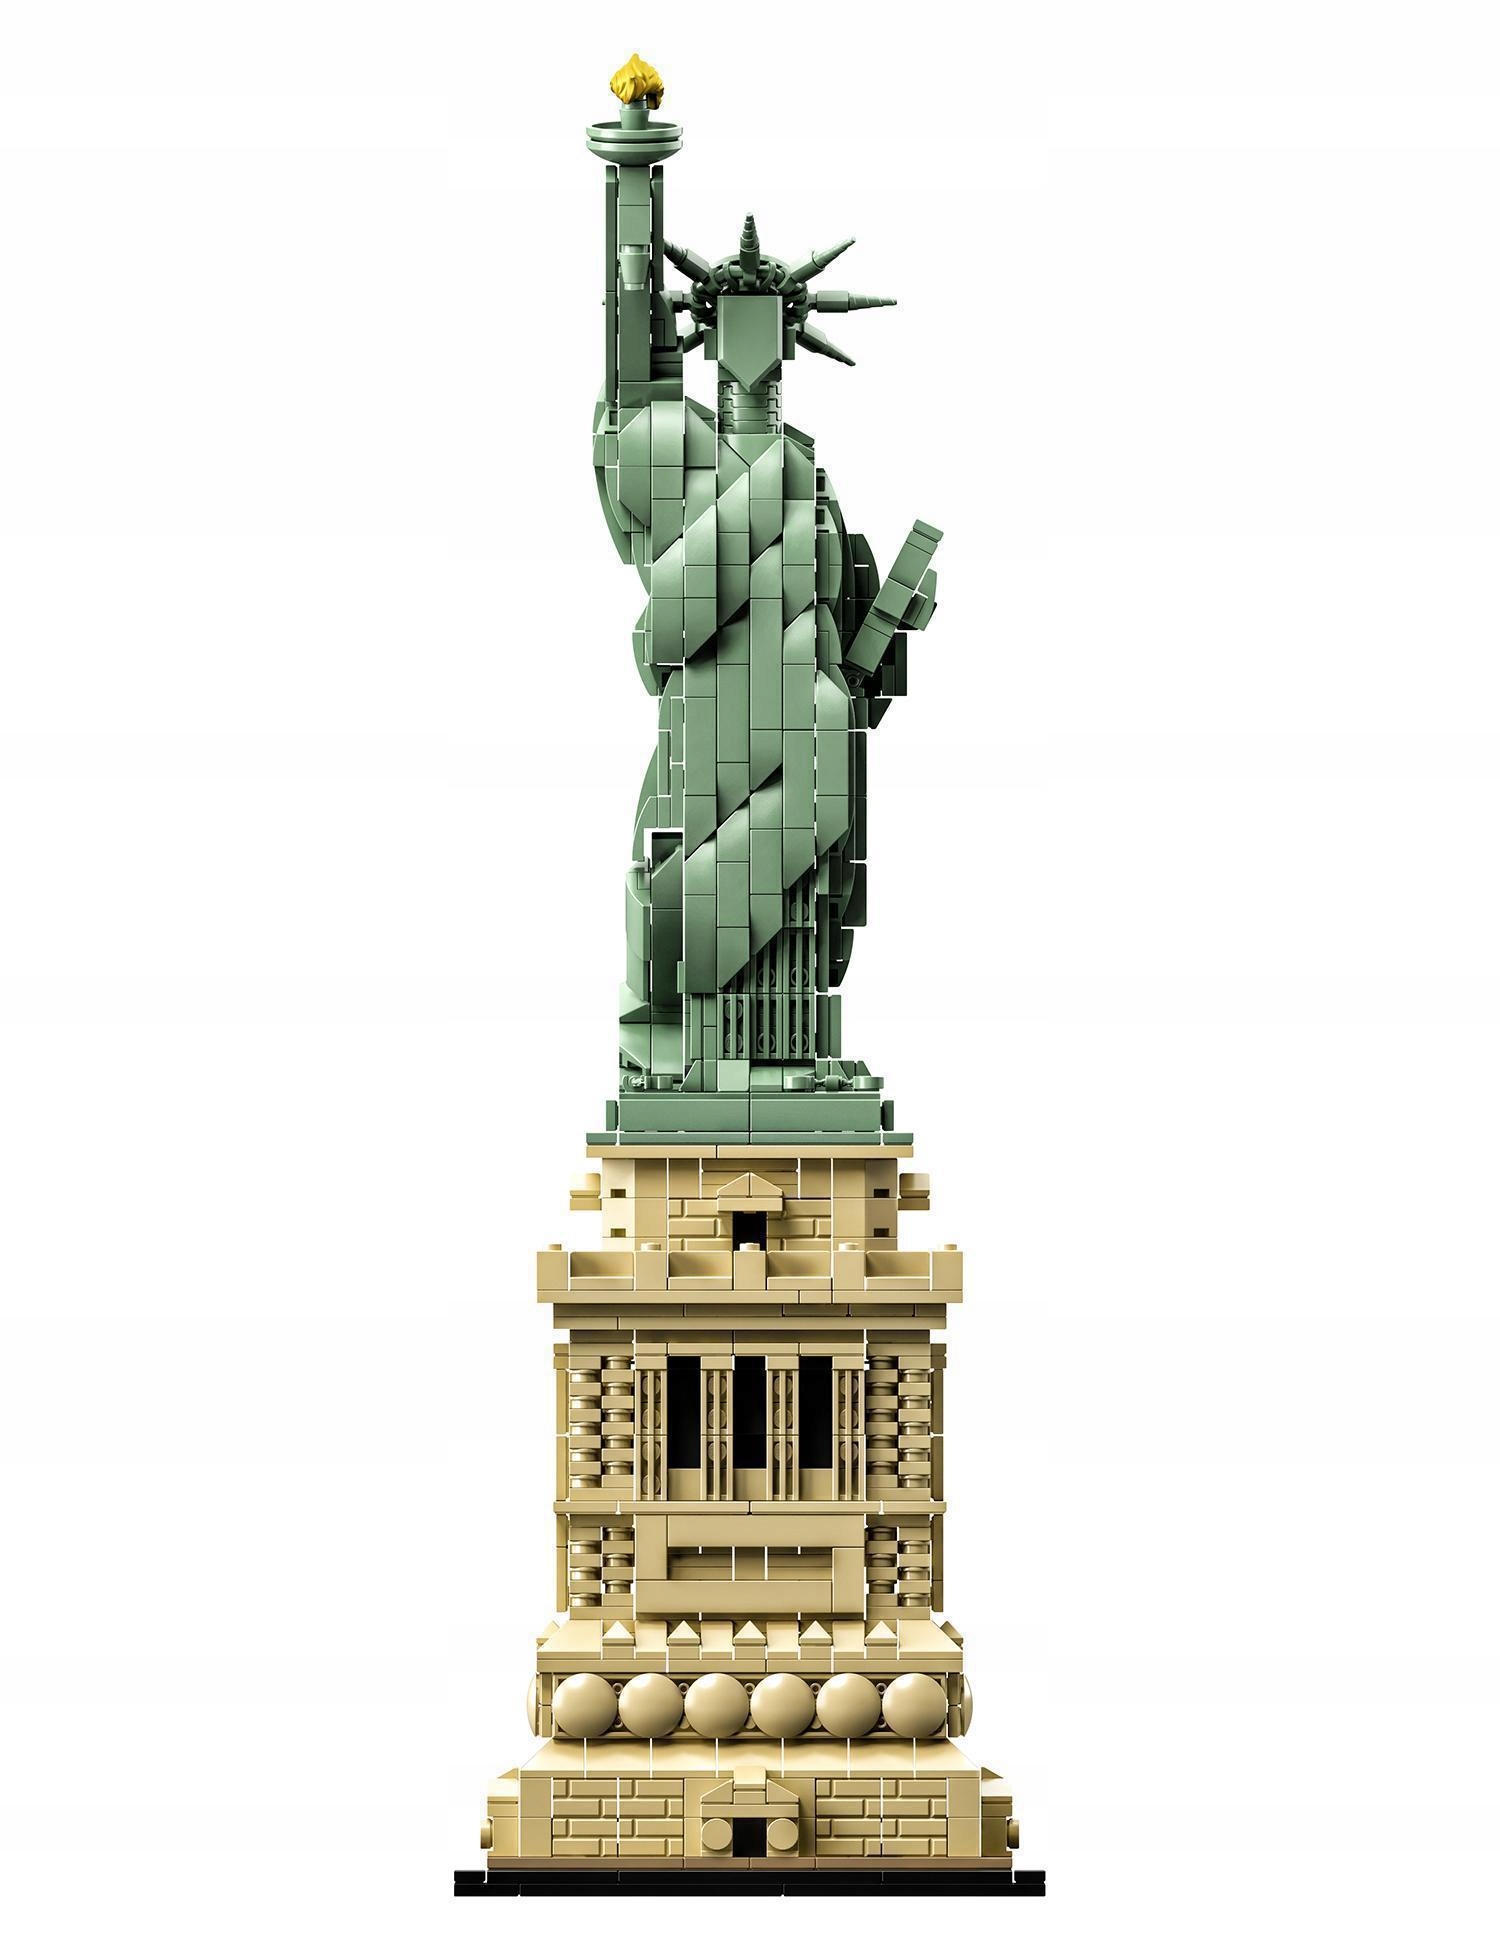 LEGO ARCHITECTURE Статуя Свободы 21042 Детали 1685 шт.